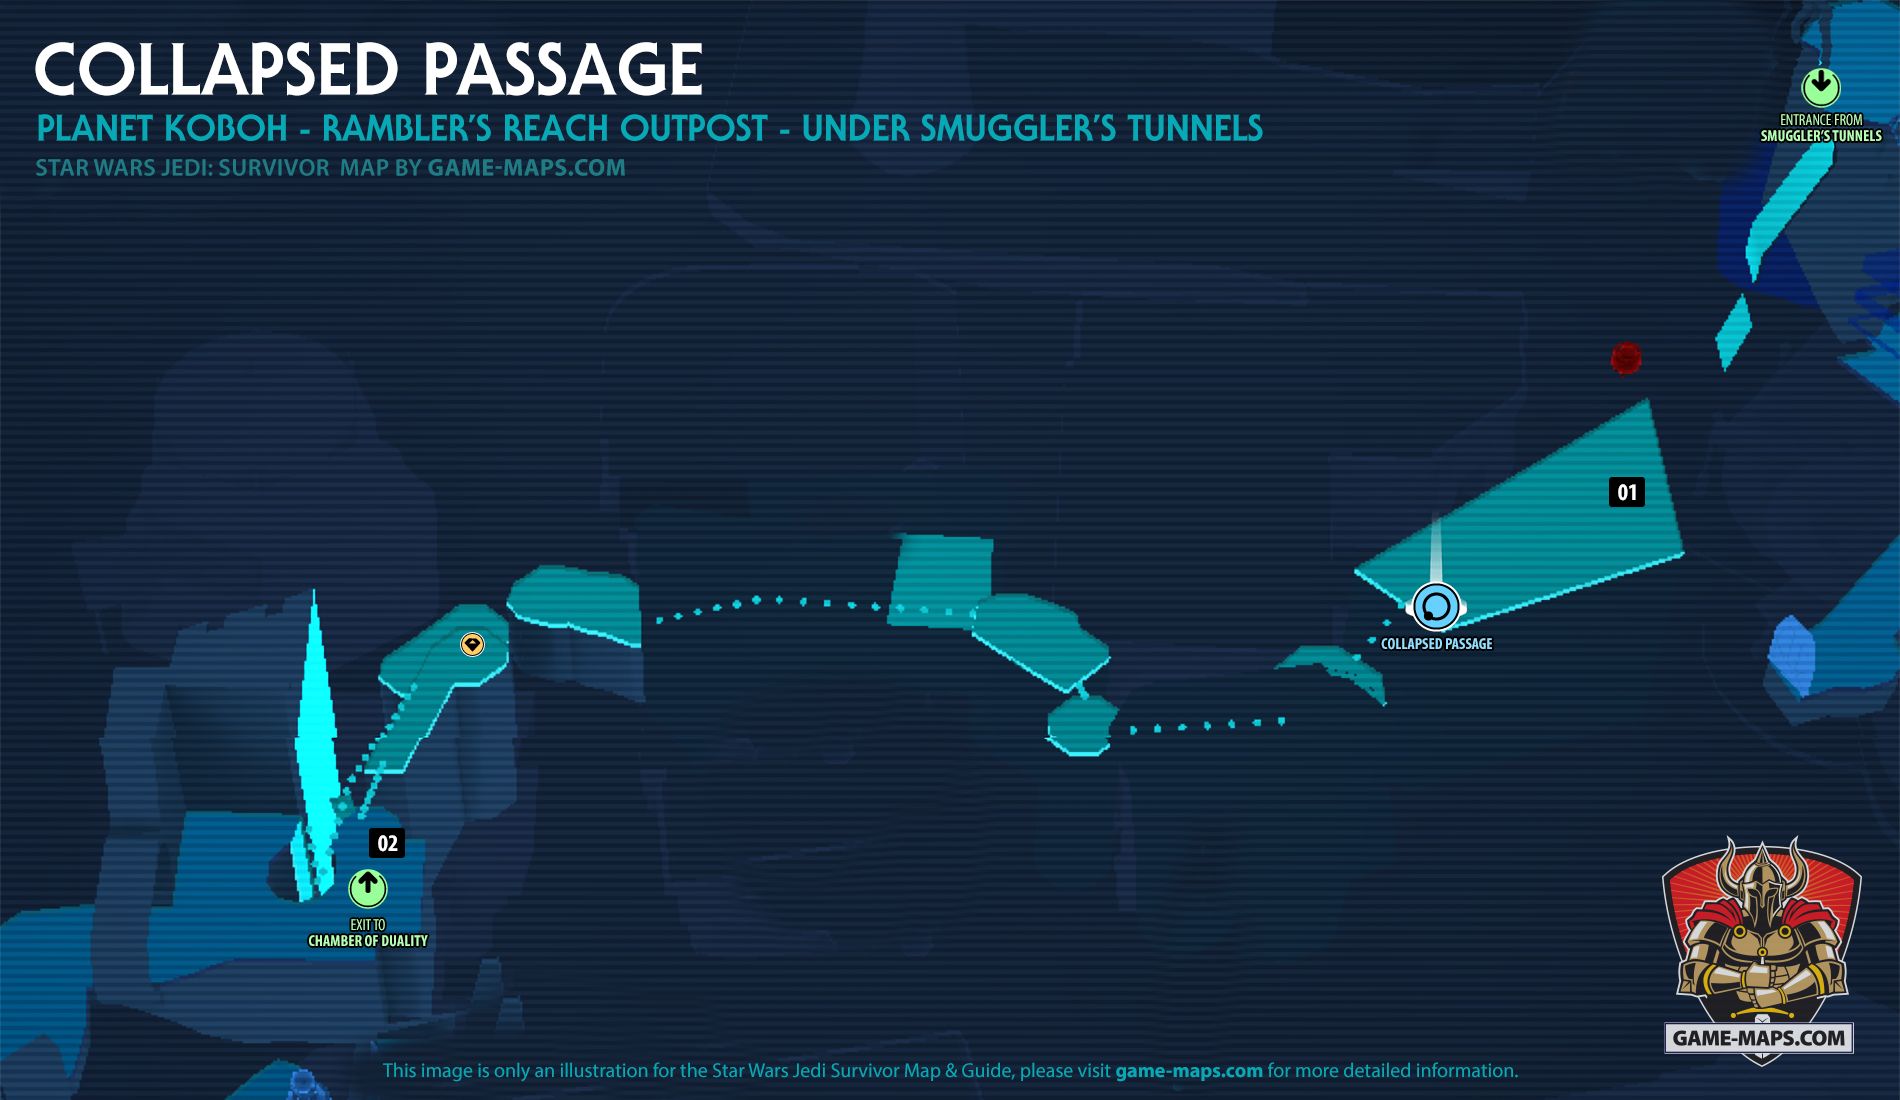 Collapsed Passage Map Koboh Planet for Star Wars Jedi Survivor